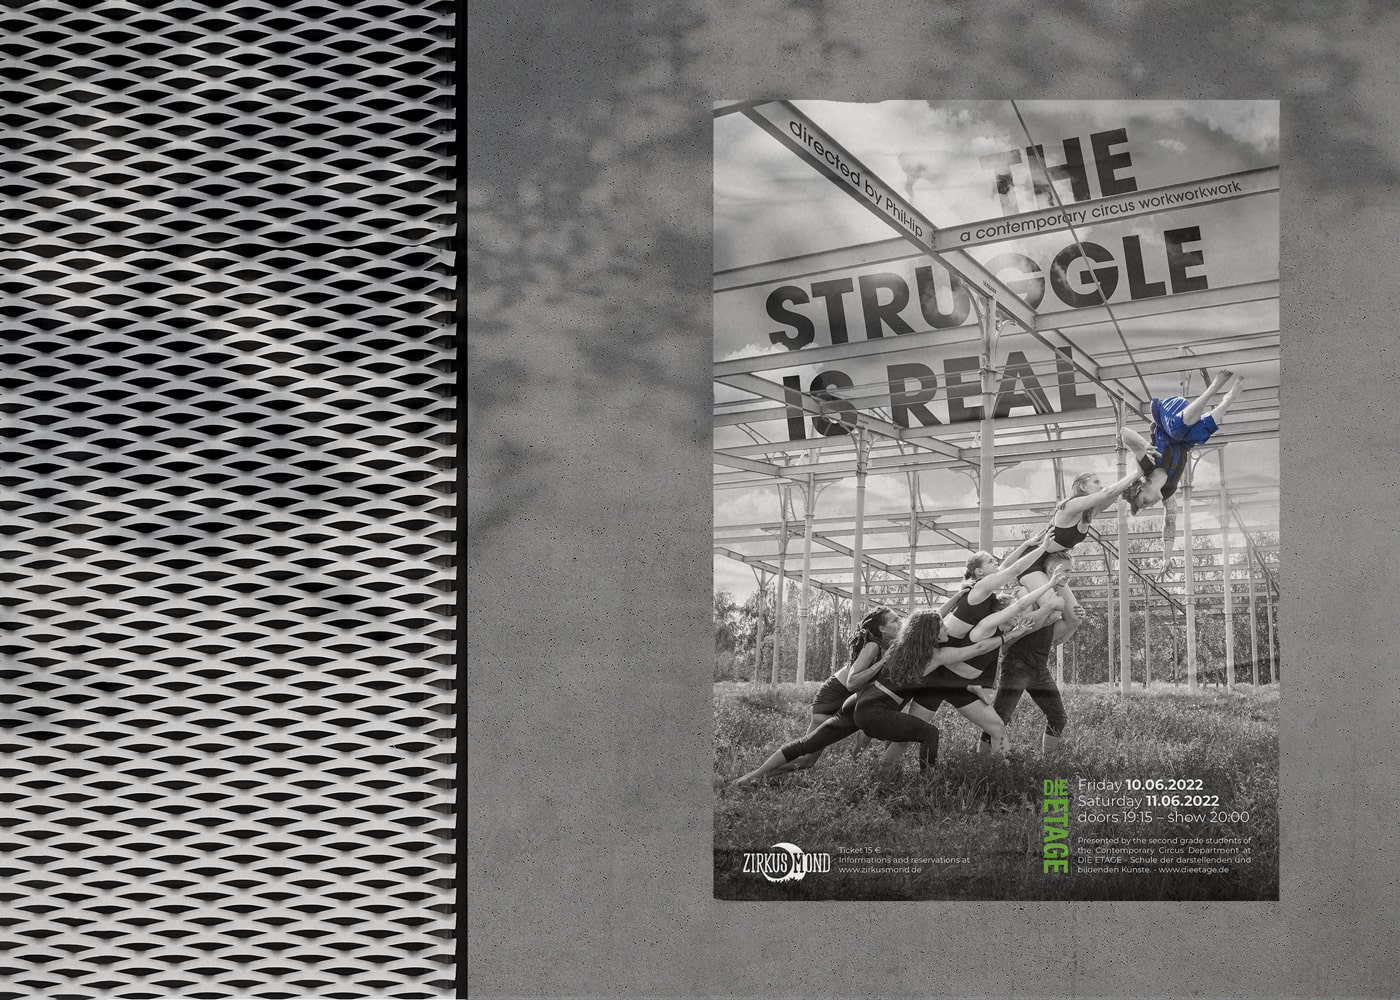 Die Etage, affiche pour le show "The Struggle is Real", 2022